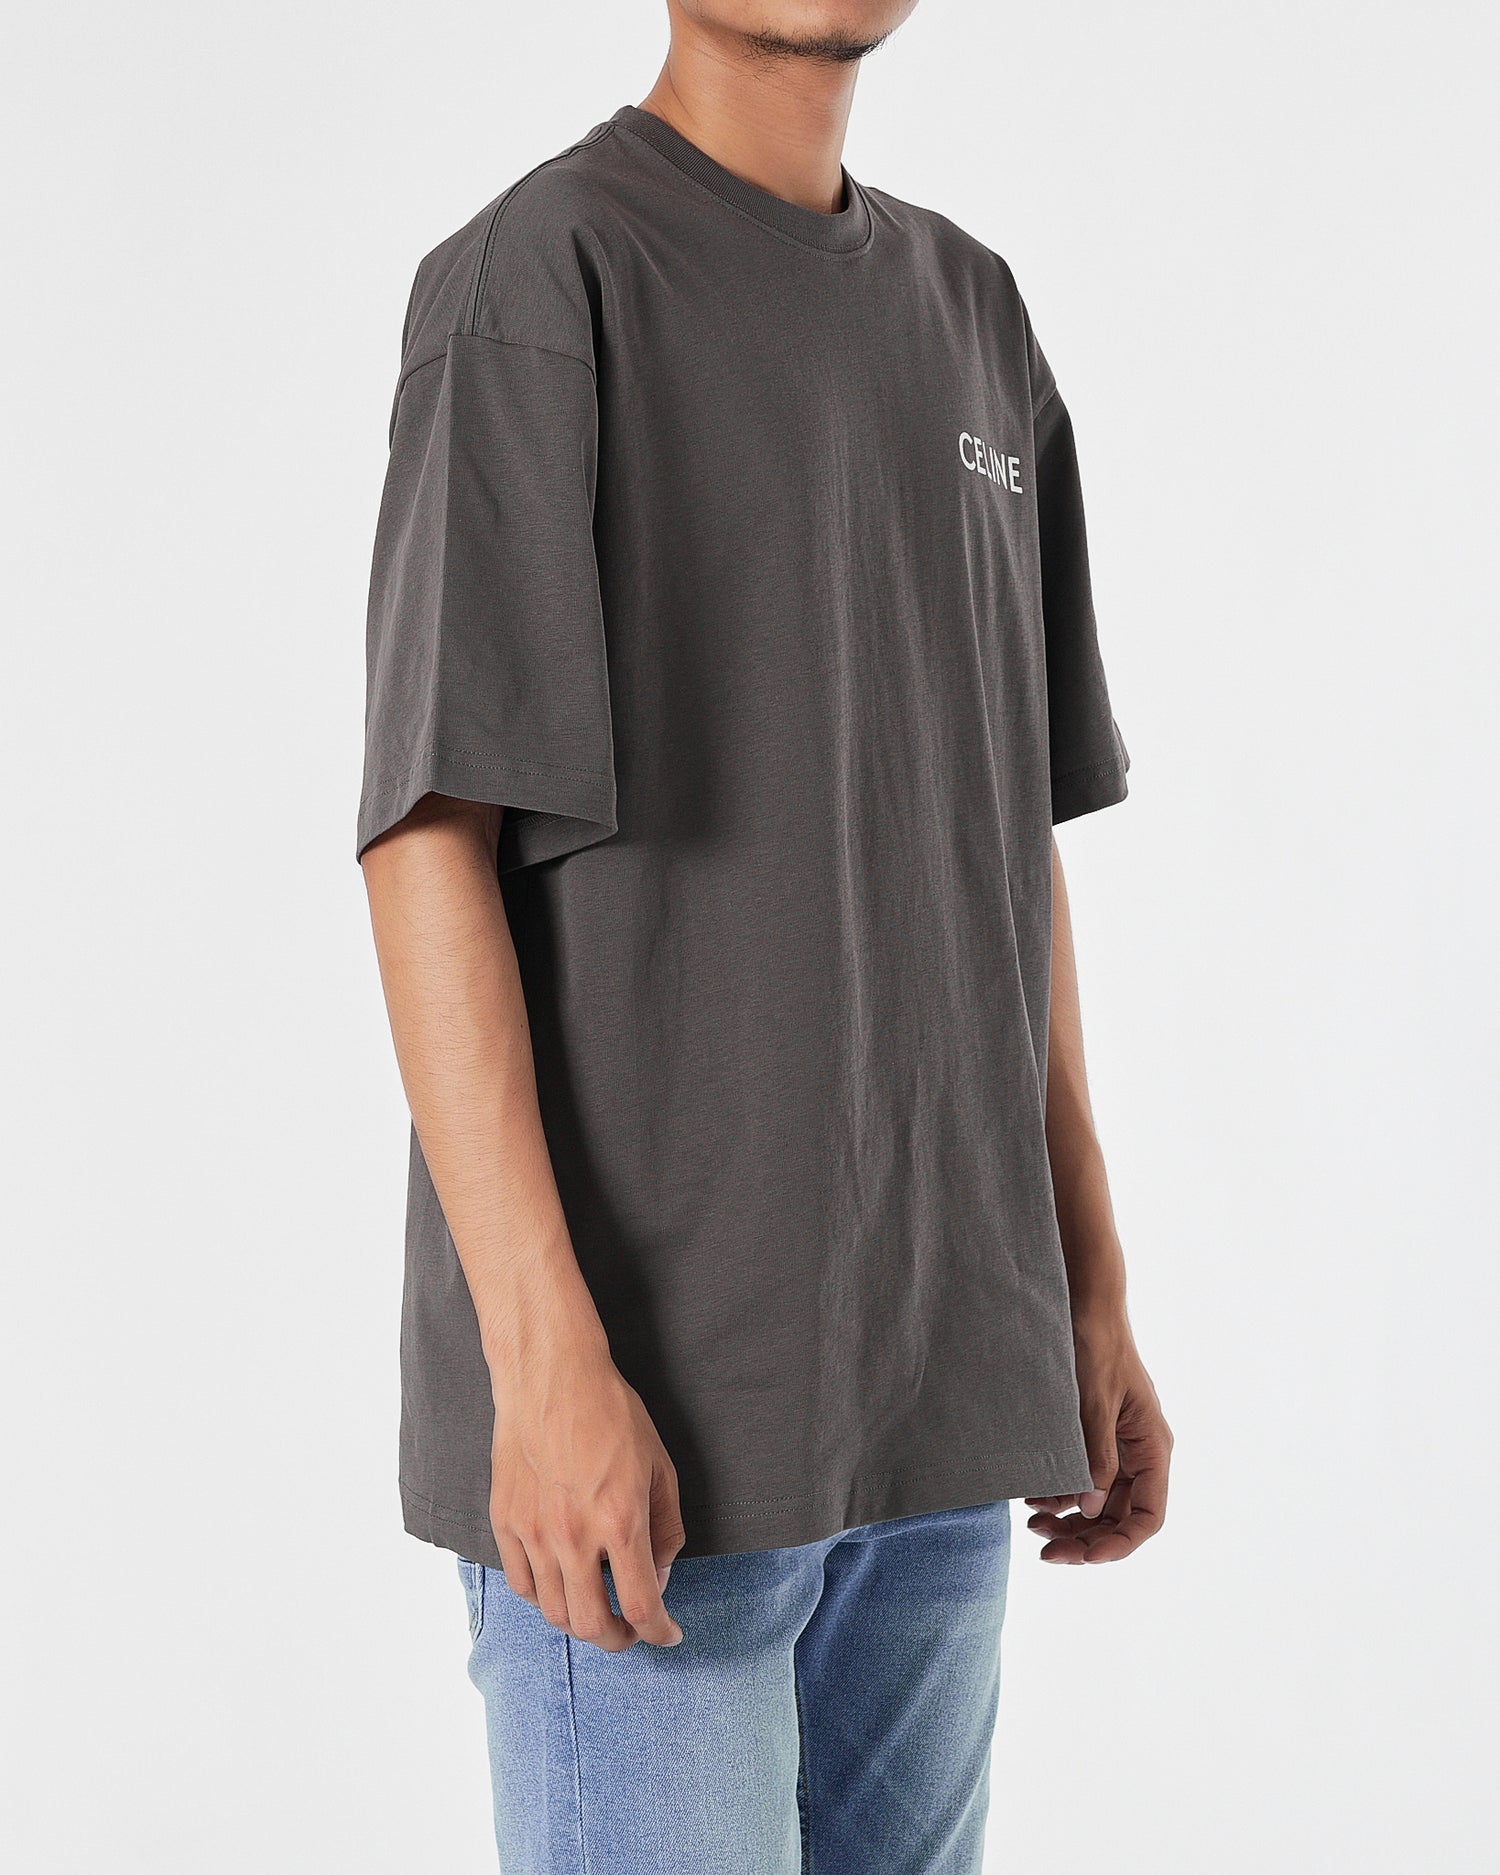 CEL Logo Printed Men Dark Grey T-Shirt 17.90